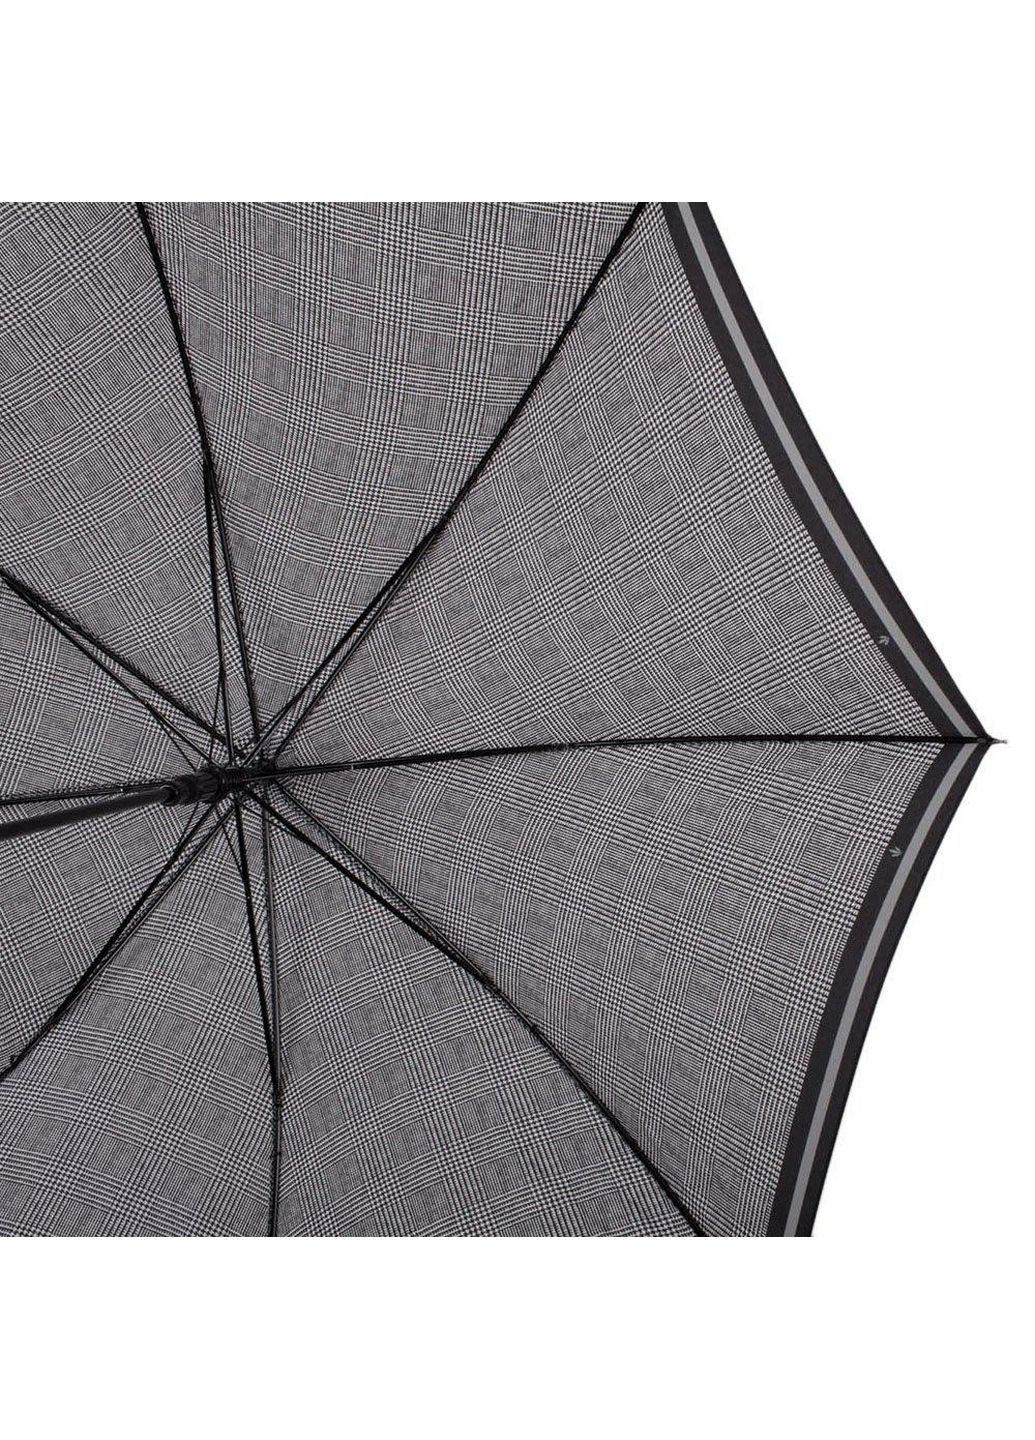 Жіноча парасолька-тростина 84см Fulton (288048402)